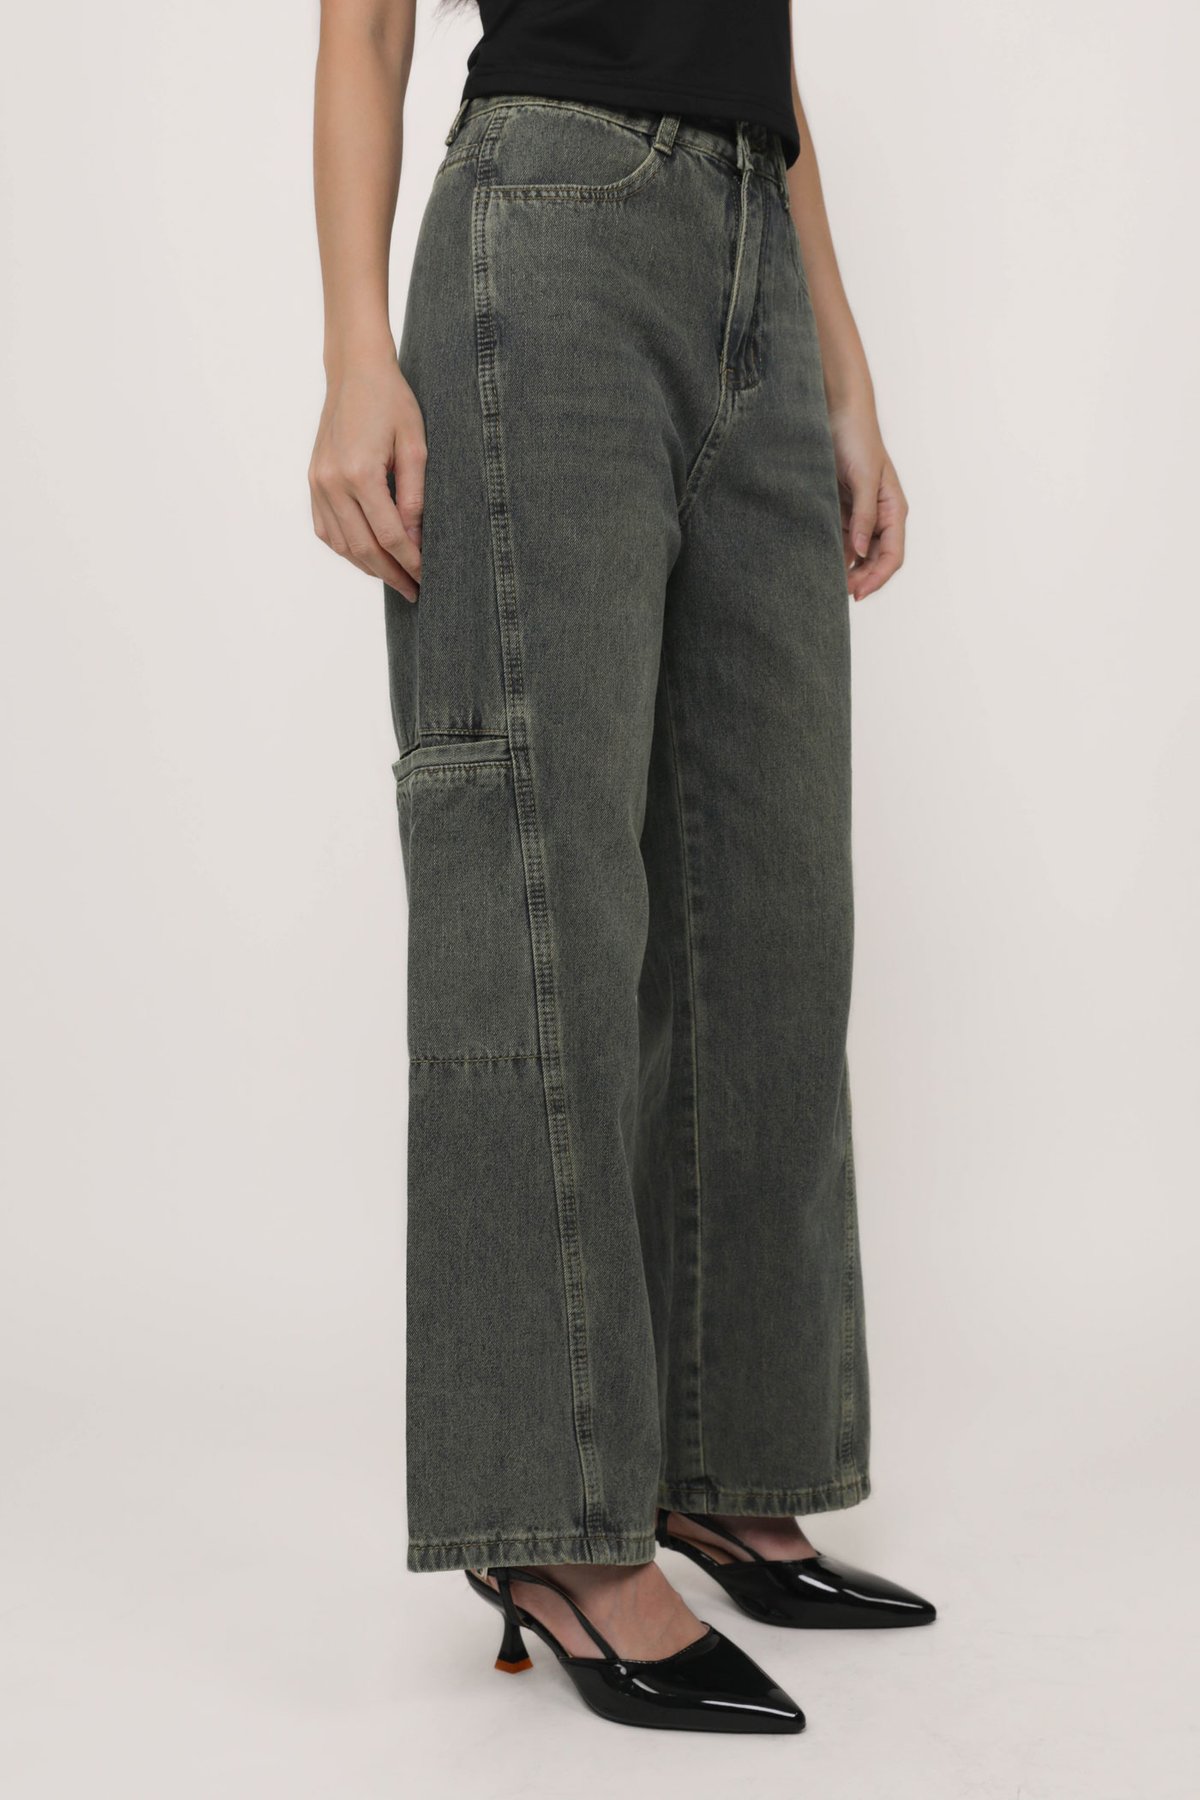 Brylee Panelled Denim Jeans (Vintage Wash)